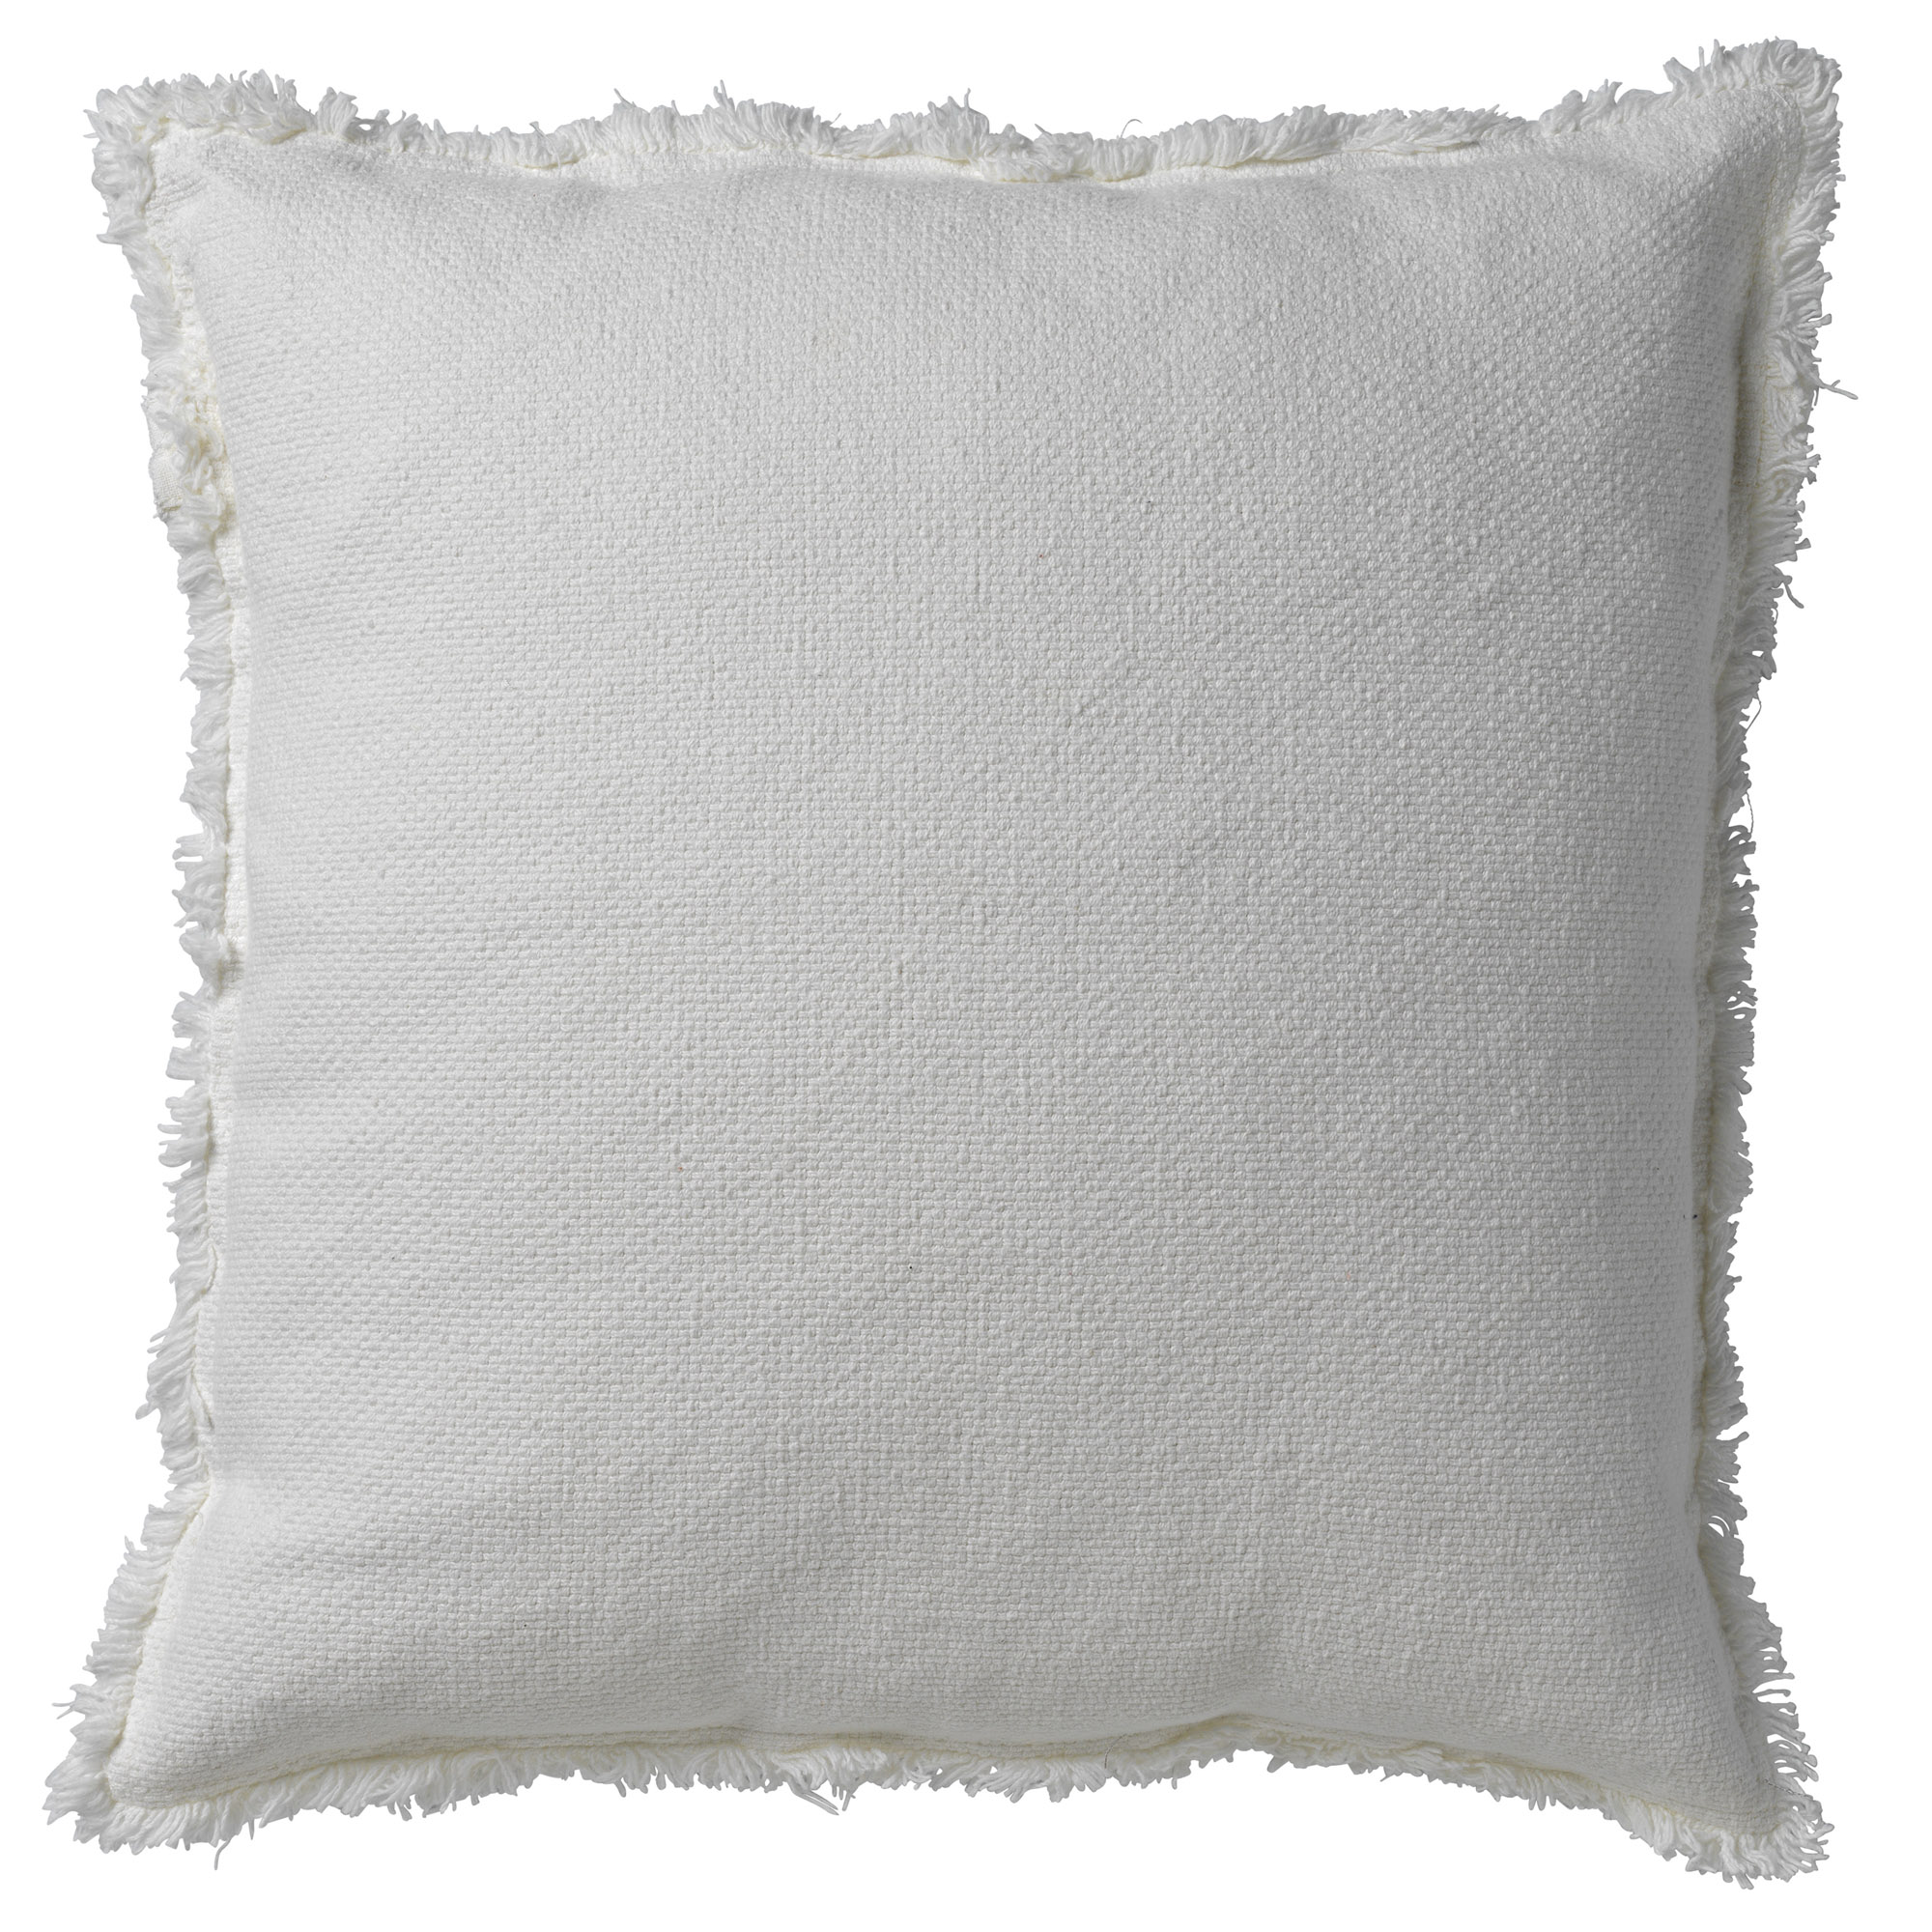 BURTO - Baumwolle mit cm Kissenbezug | White 60x60 stone-washed Kissenhülle optik DDL02121000126 Snow 